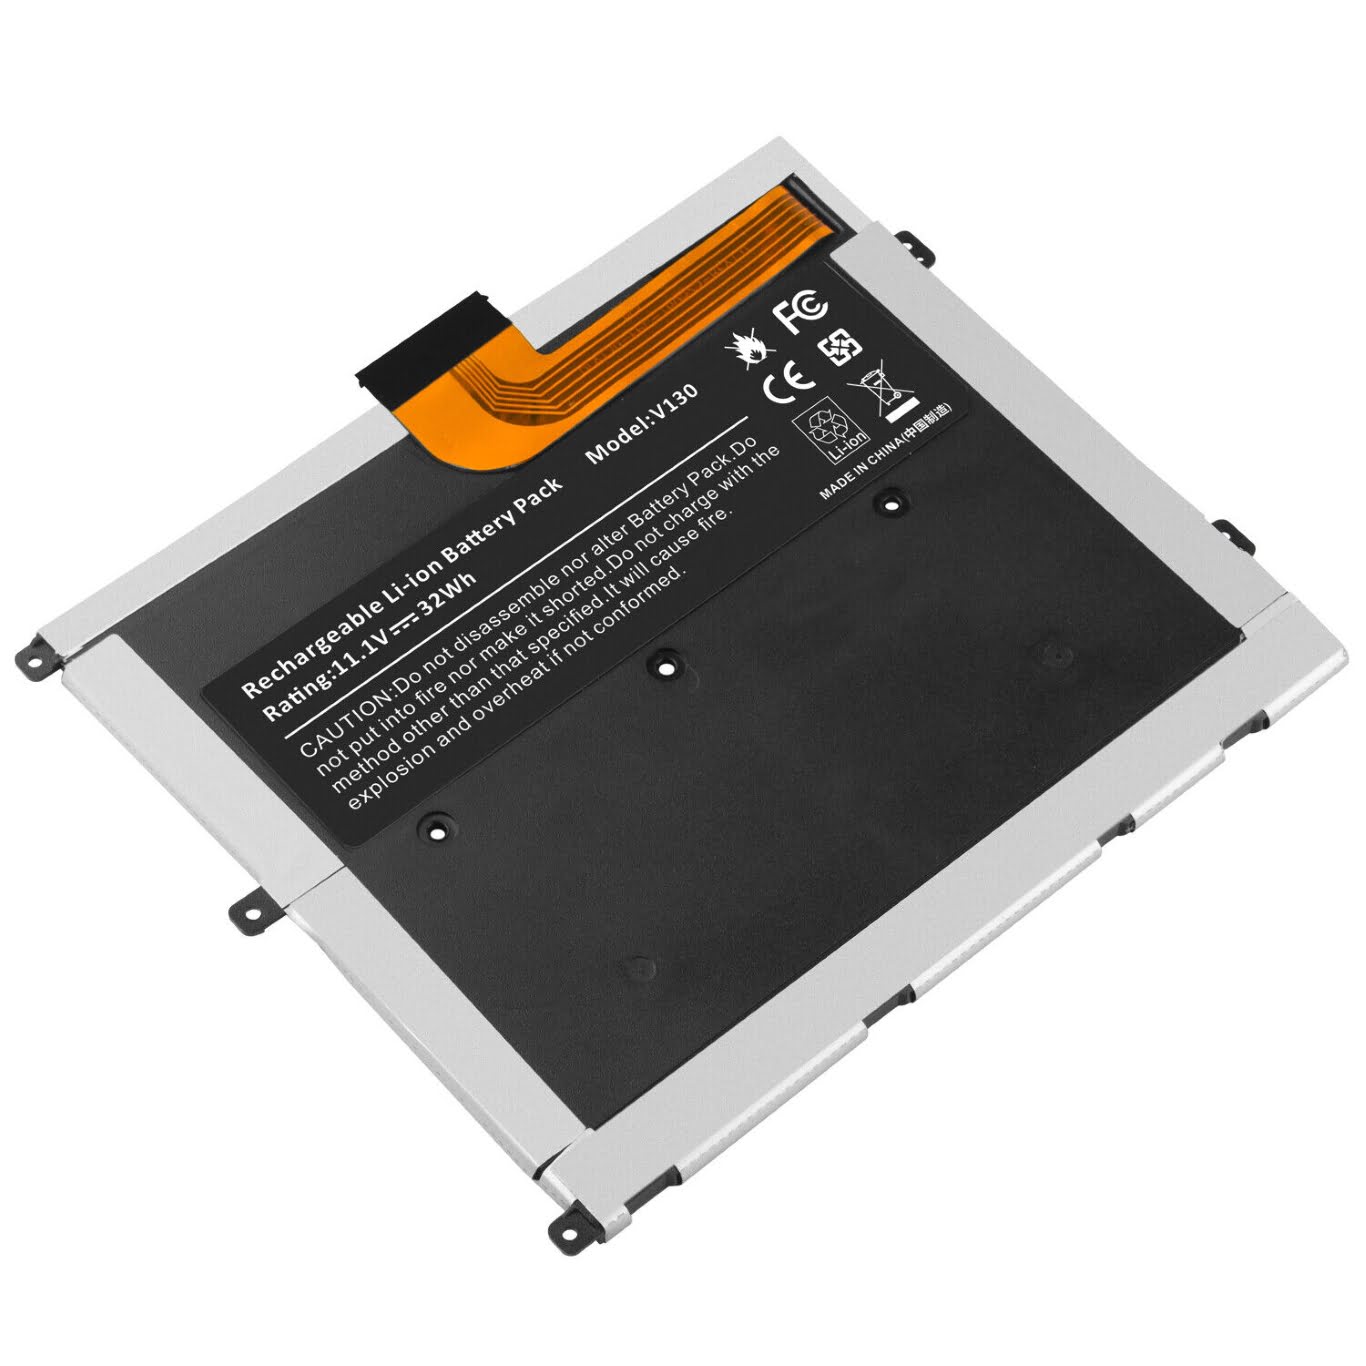 0NTG4J, 0PRW6G replacement Laptop Battery for Dell Vostro V13, Vostro V130, 11.1 V, 6 cells, 32 Wh